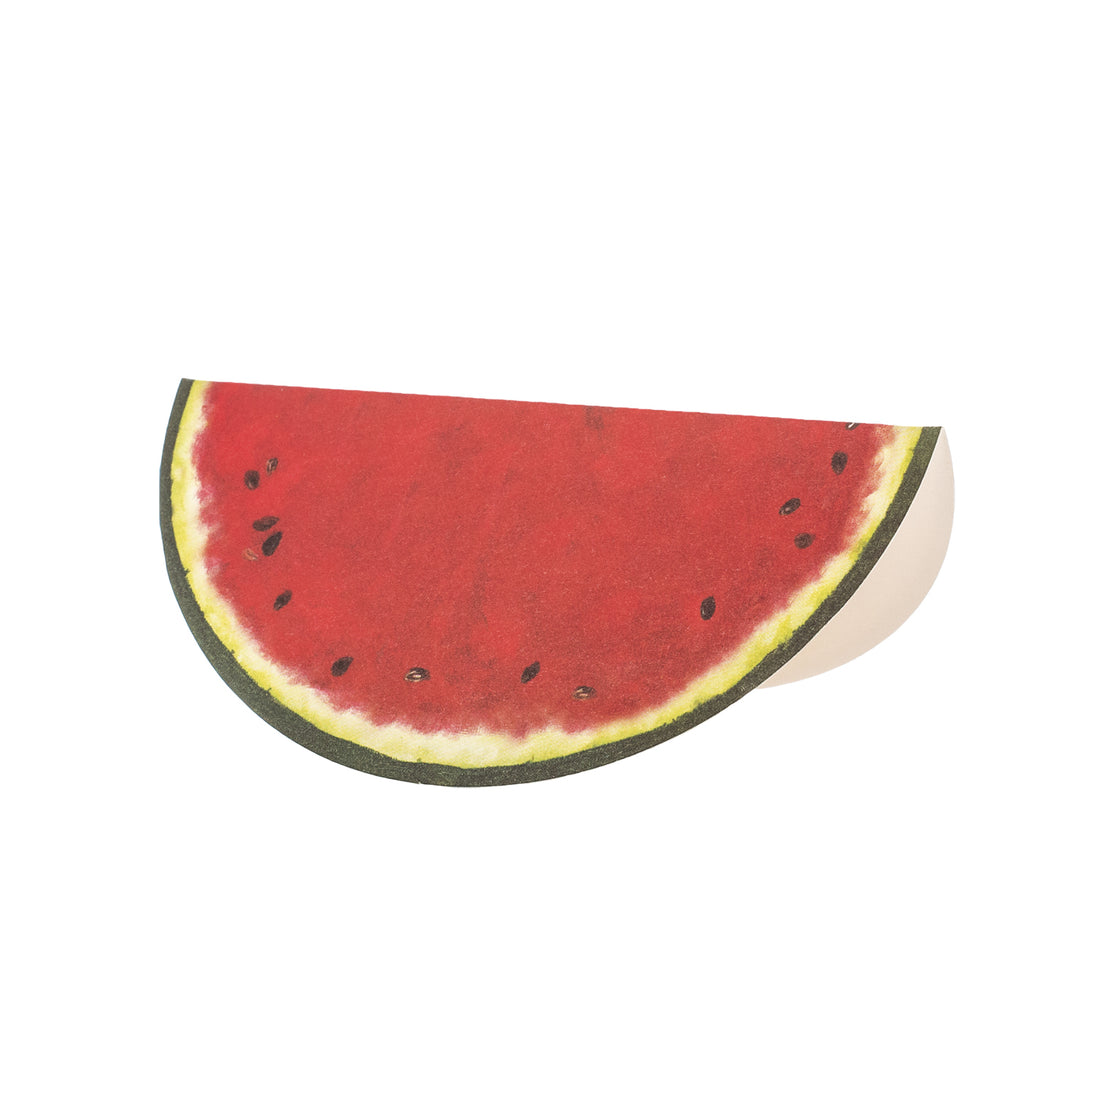 Watermelon Place Card